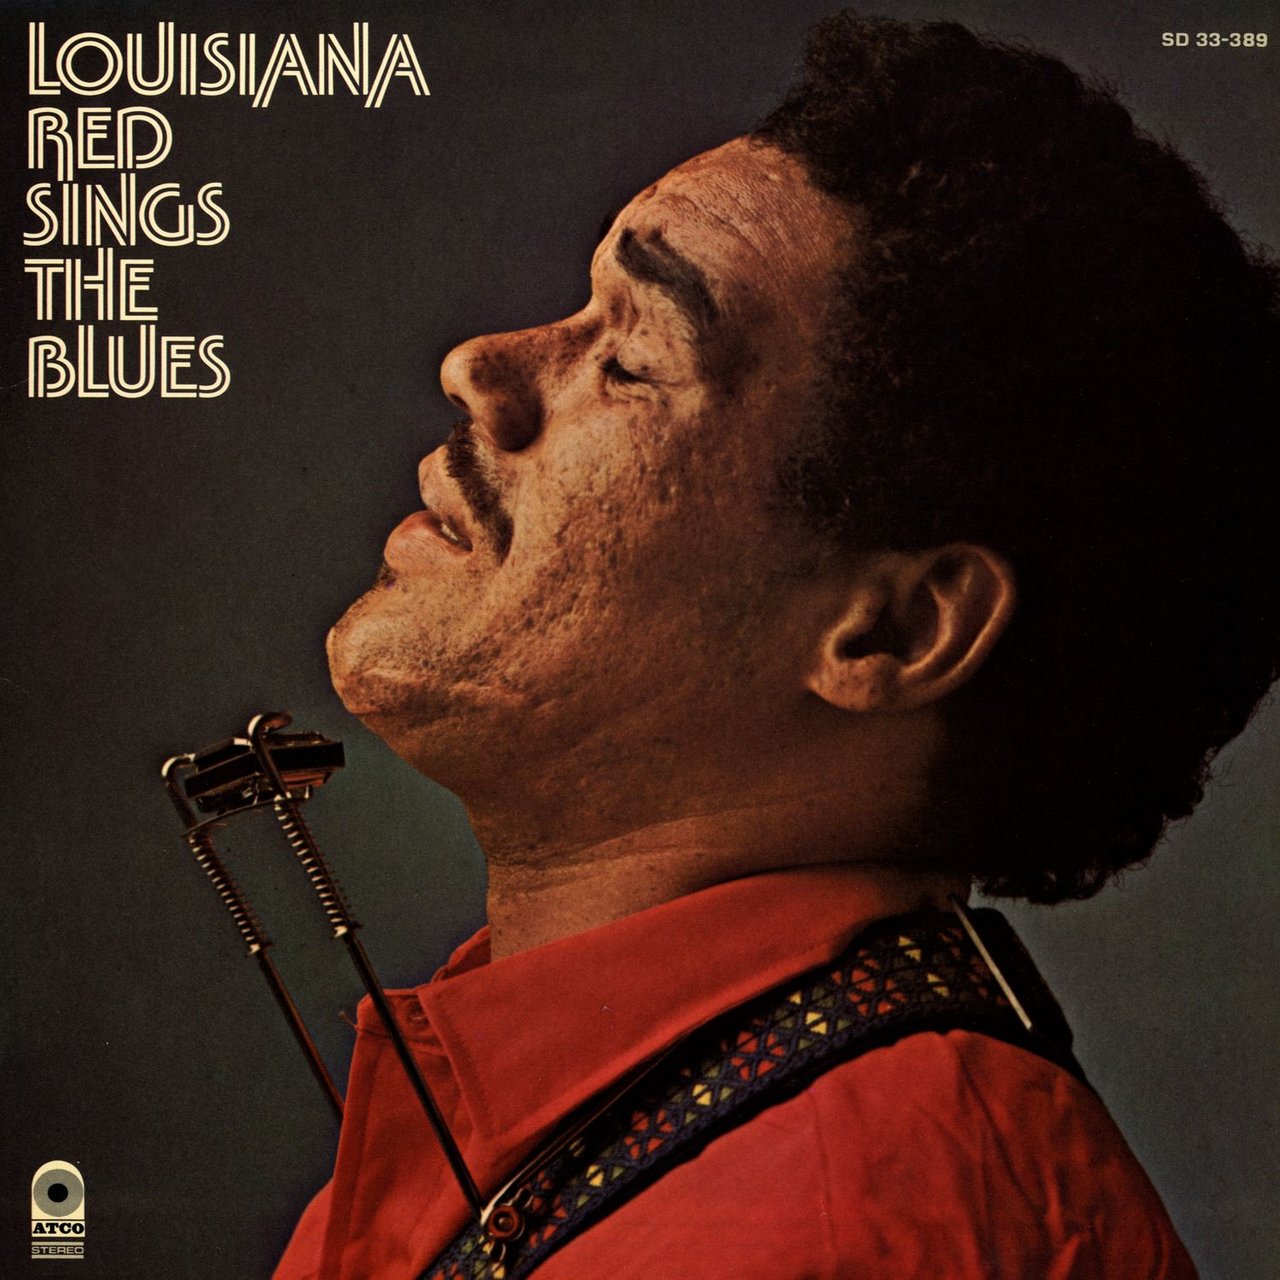 Louisiana Red - Louisiana Red Sings The Blues [1972]